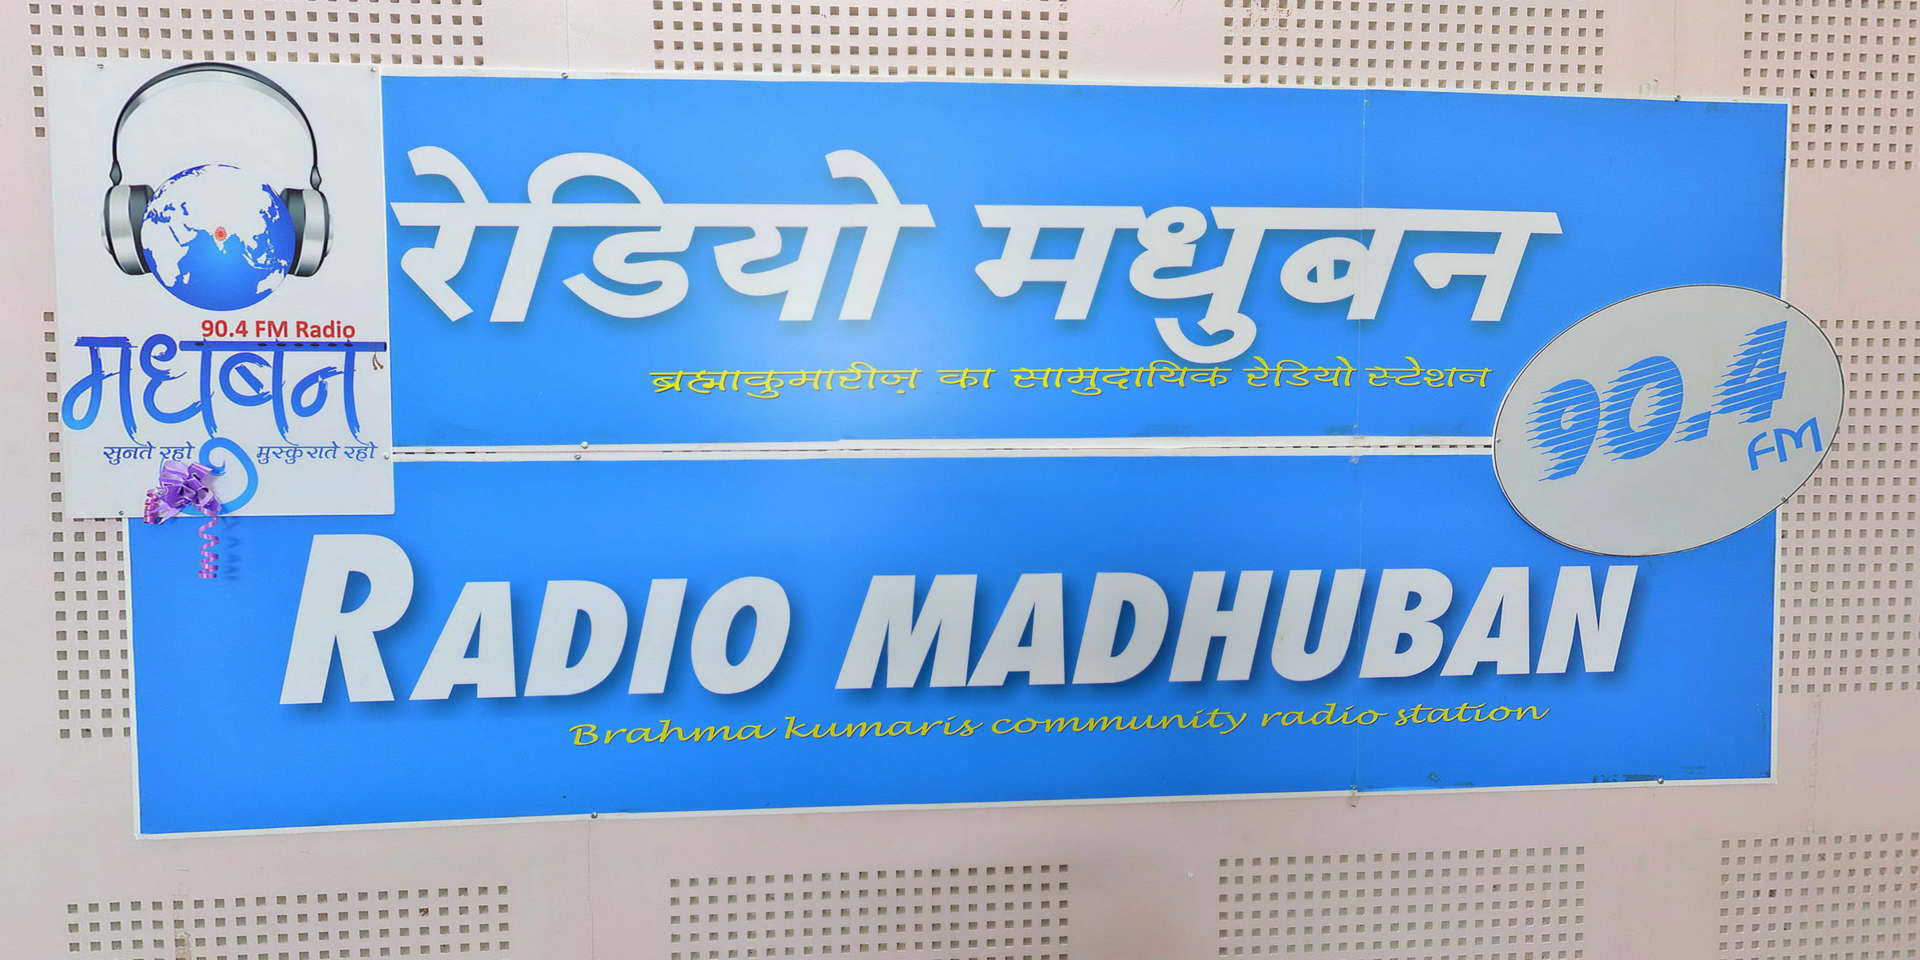 Radio madhuban studio 5